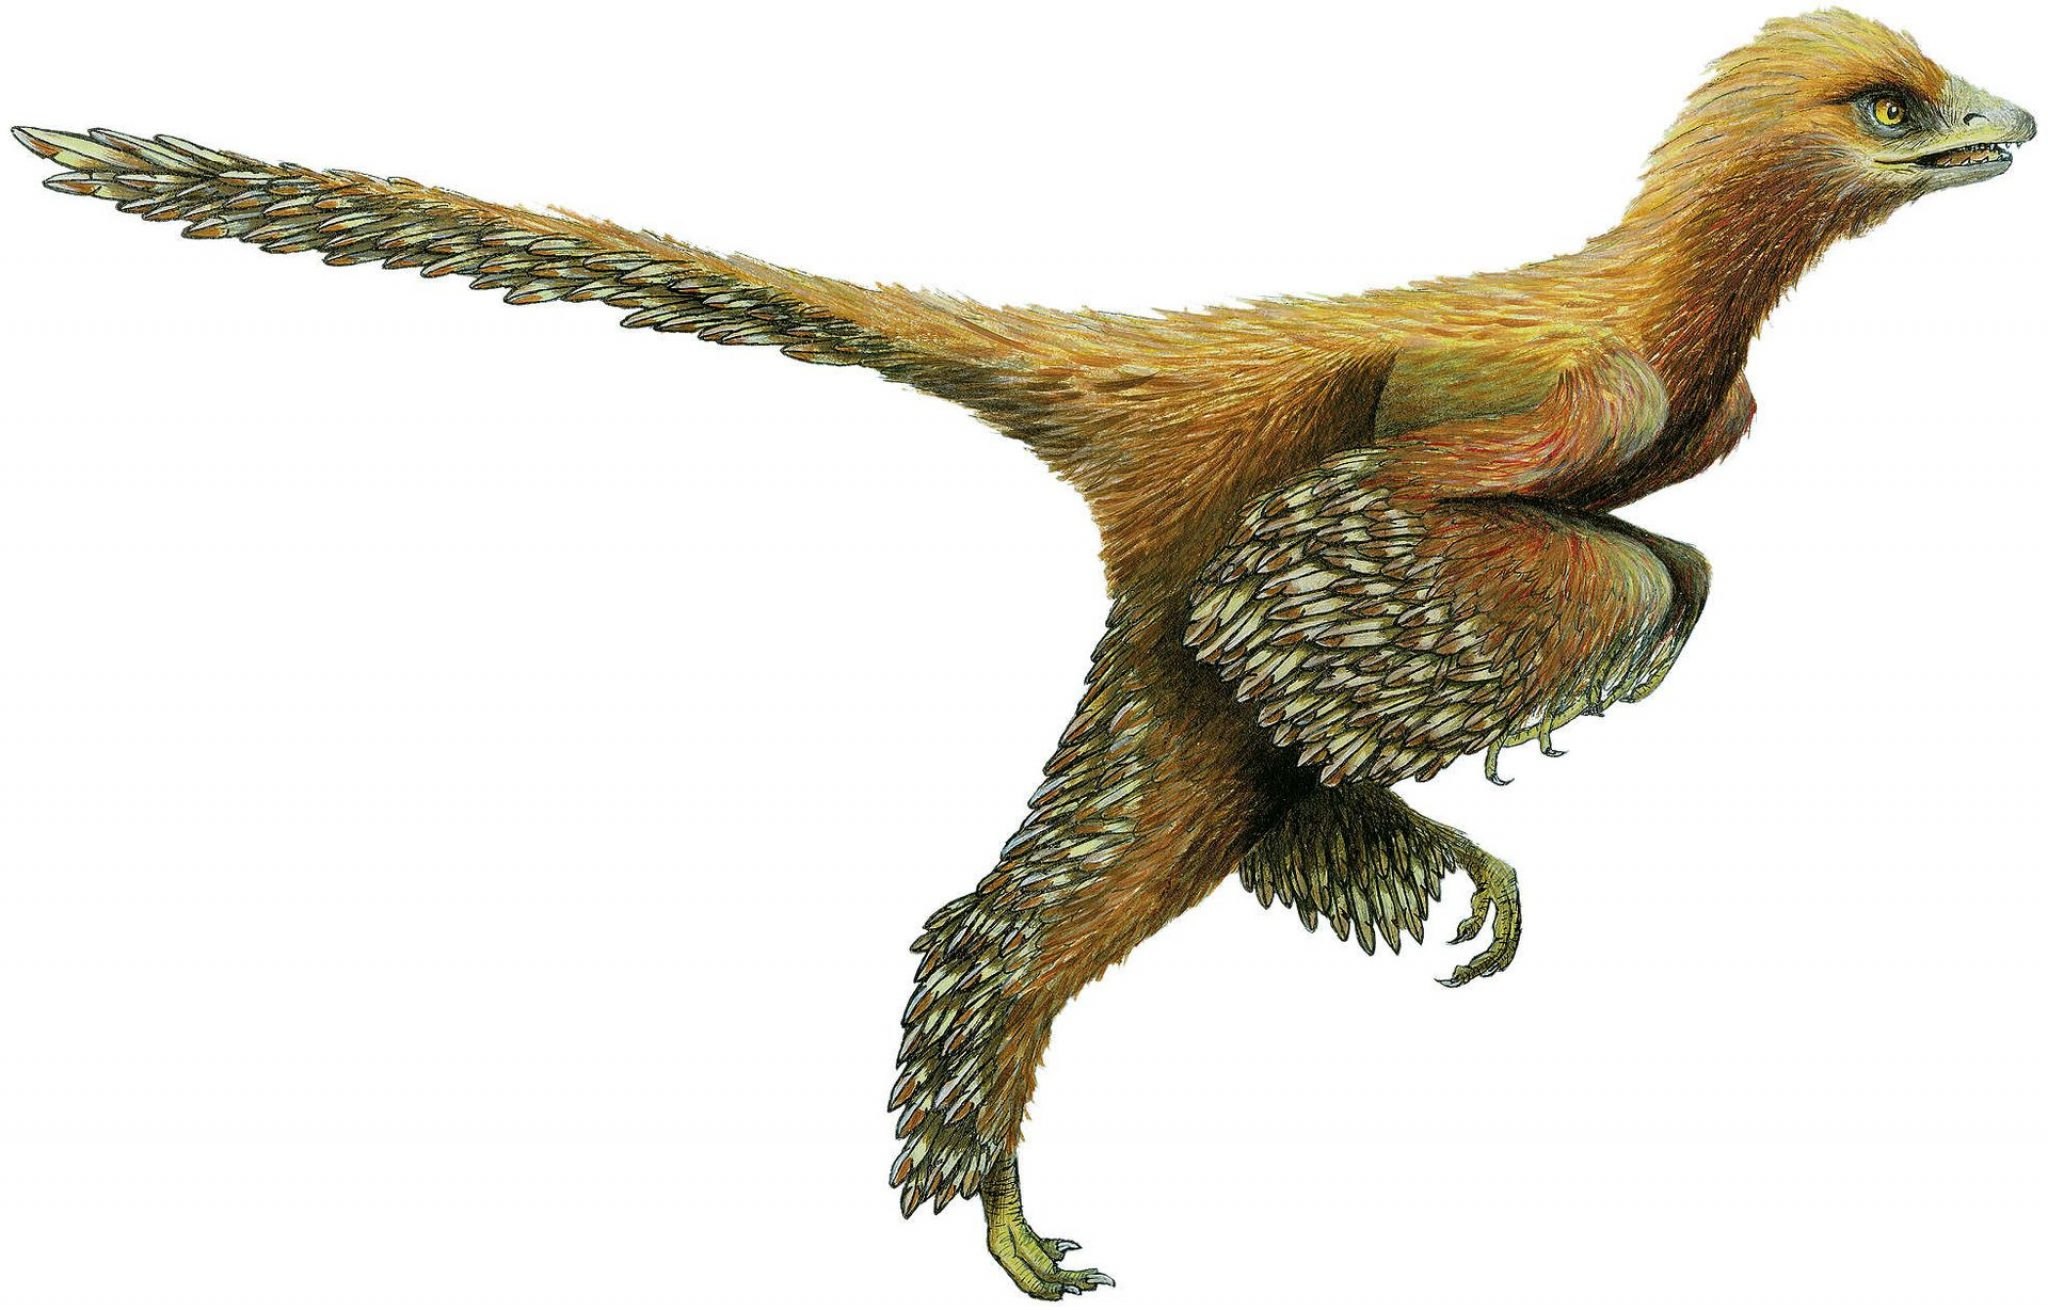 Птицы древних времен. Aurornis. Aurornis птица. Археоптерикс динозавр. Титанис Гасторнис.